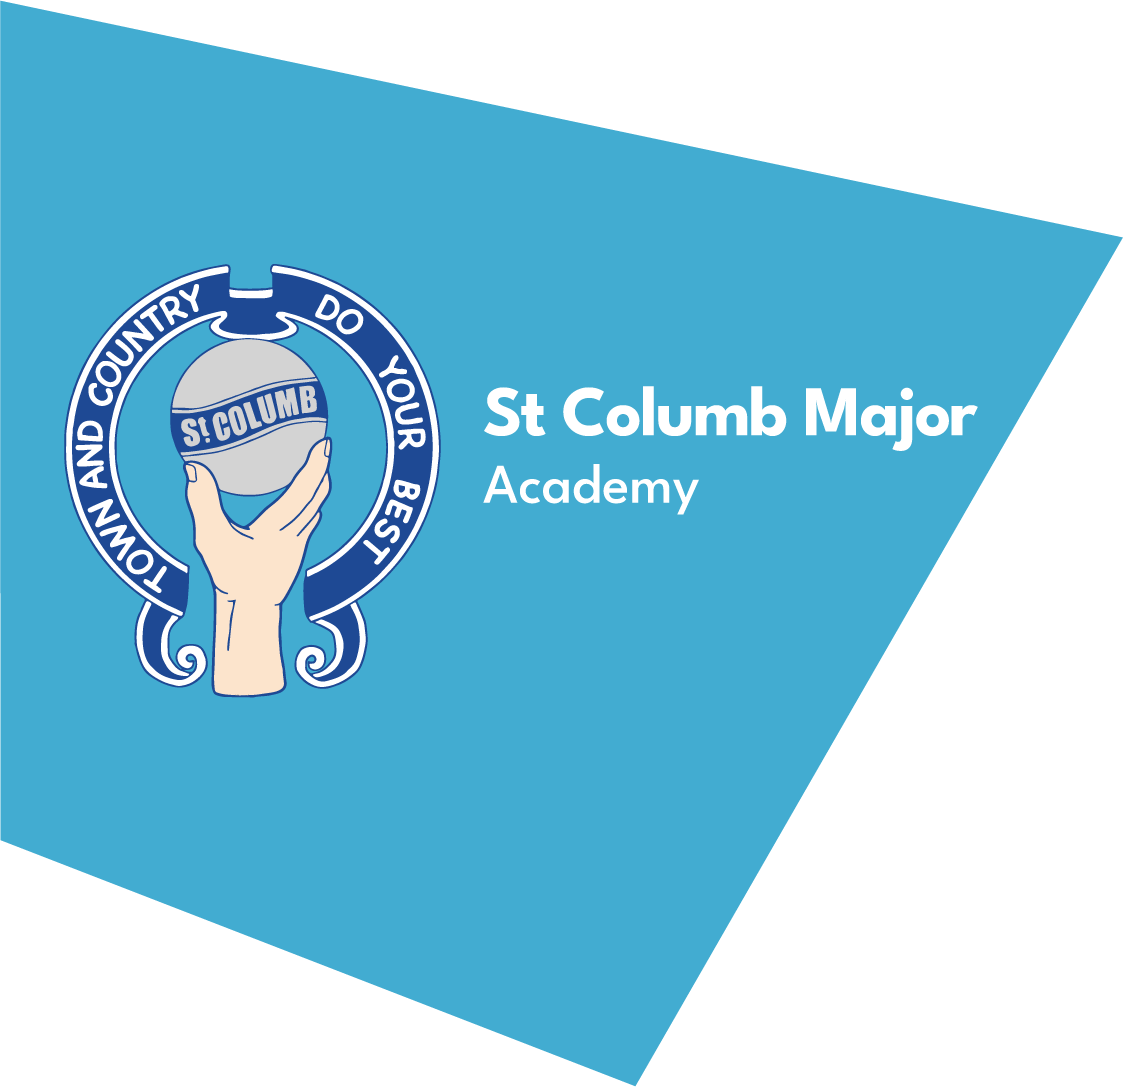 St Columb Major Academy